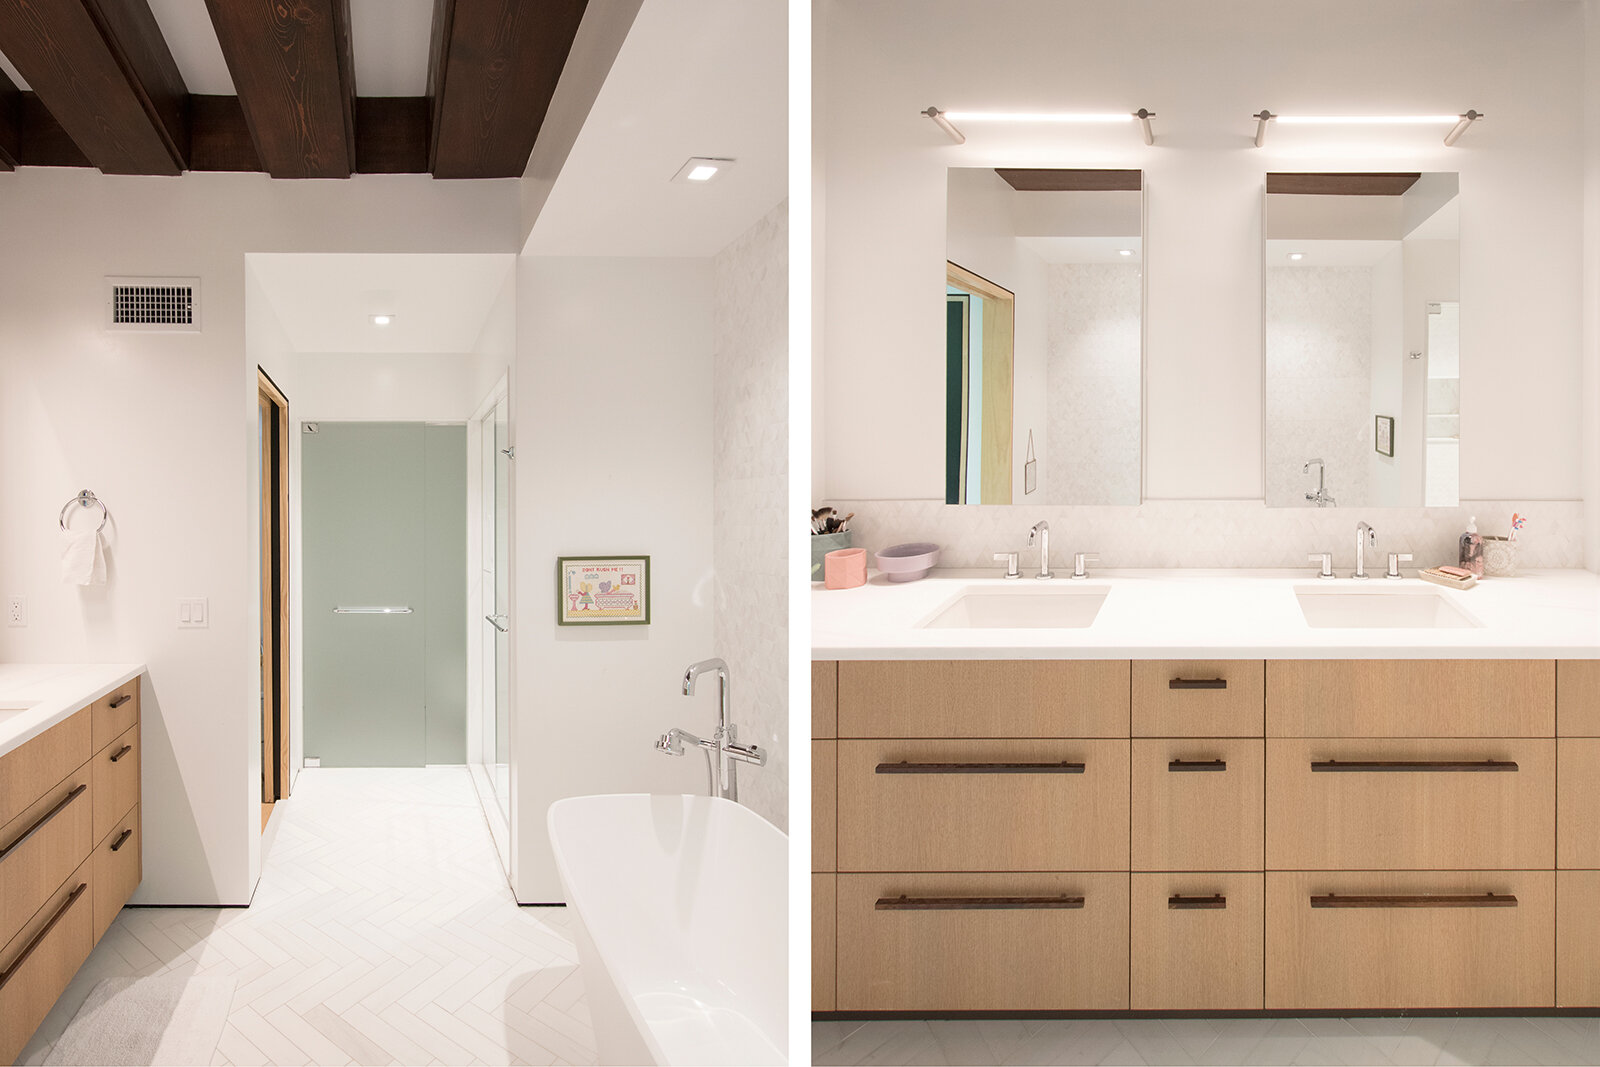 19-res4-re4a-resolution-4-architecture-modern-modular-prefab-fenimore road addition-interior-primary bathroom.jpg